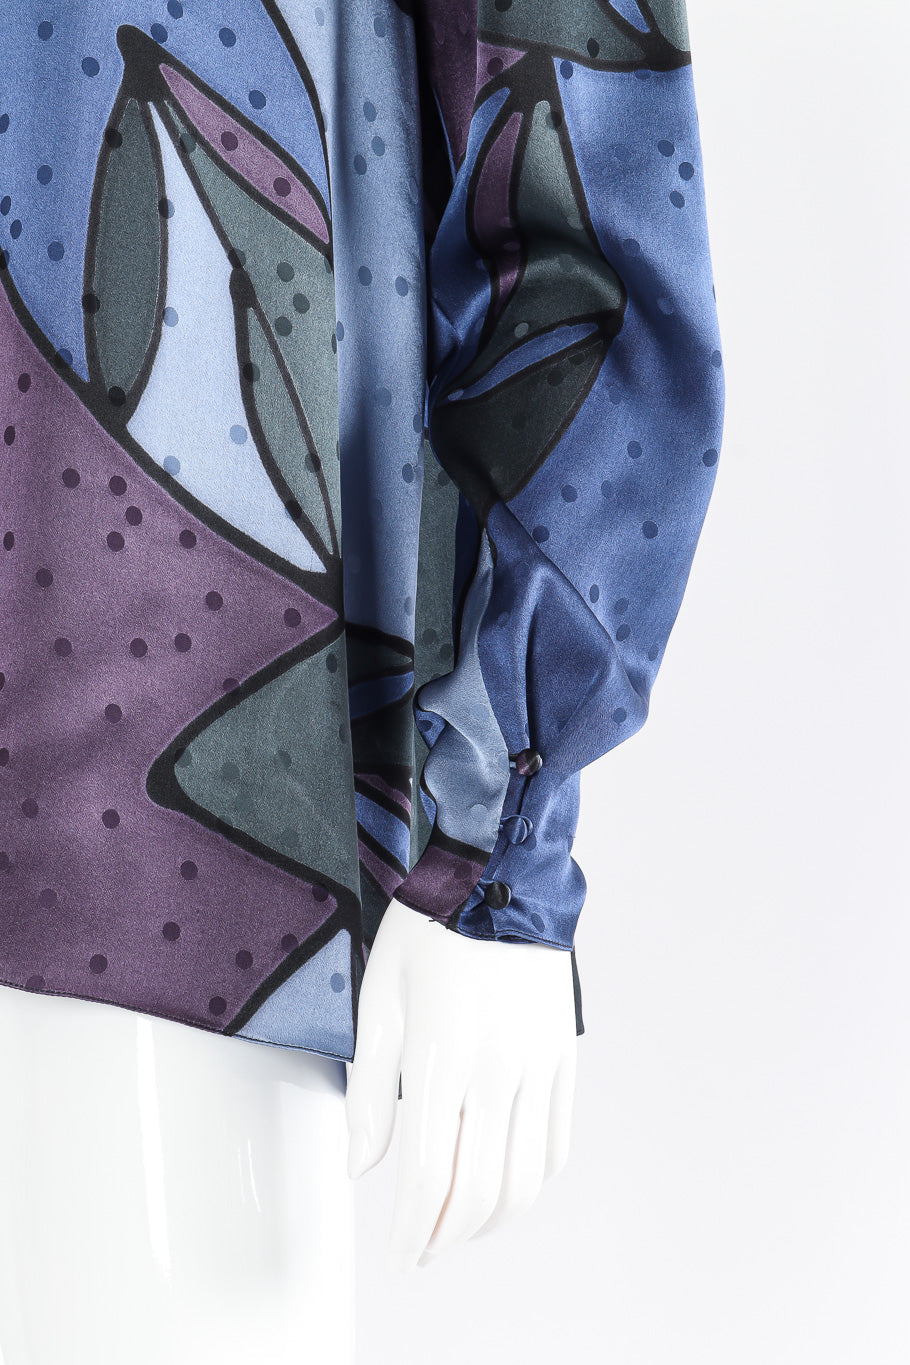 Silk blouse by Sansappelle Collections mannequin sleeve close  @recessla